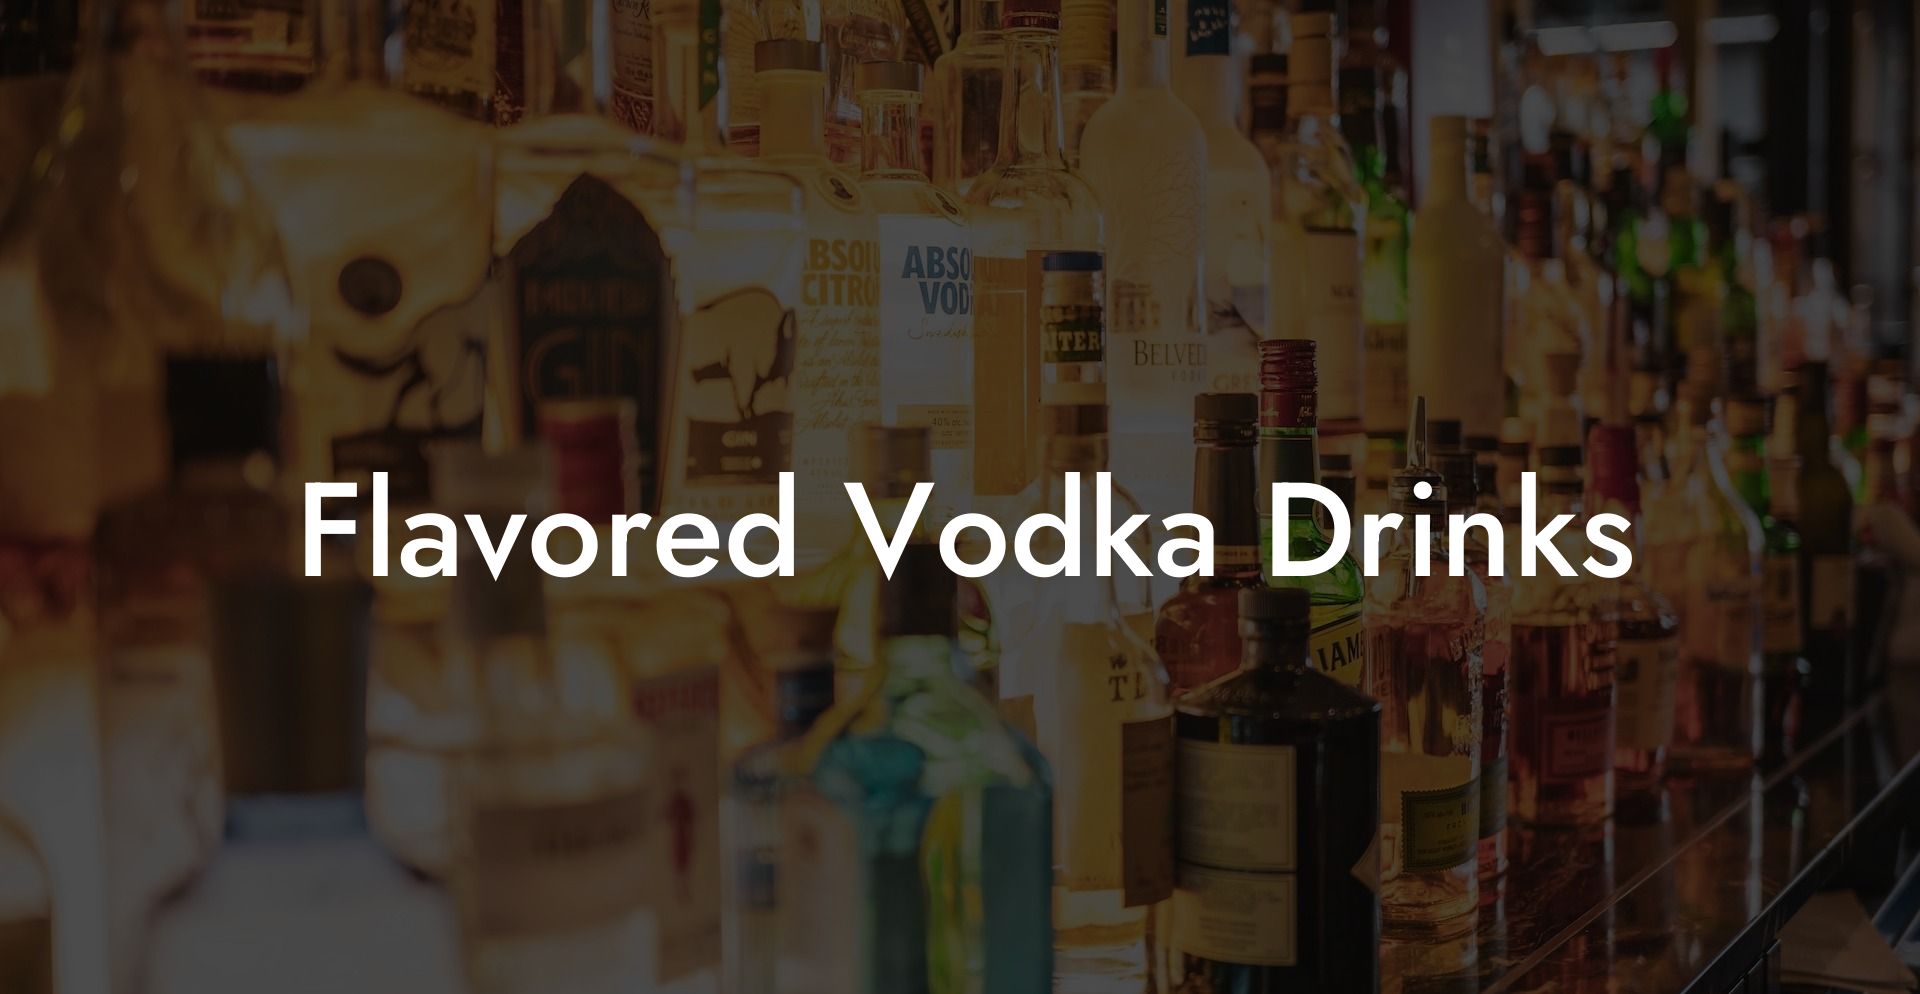 Flavored Vodka Drinks